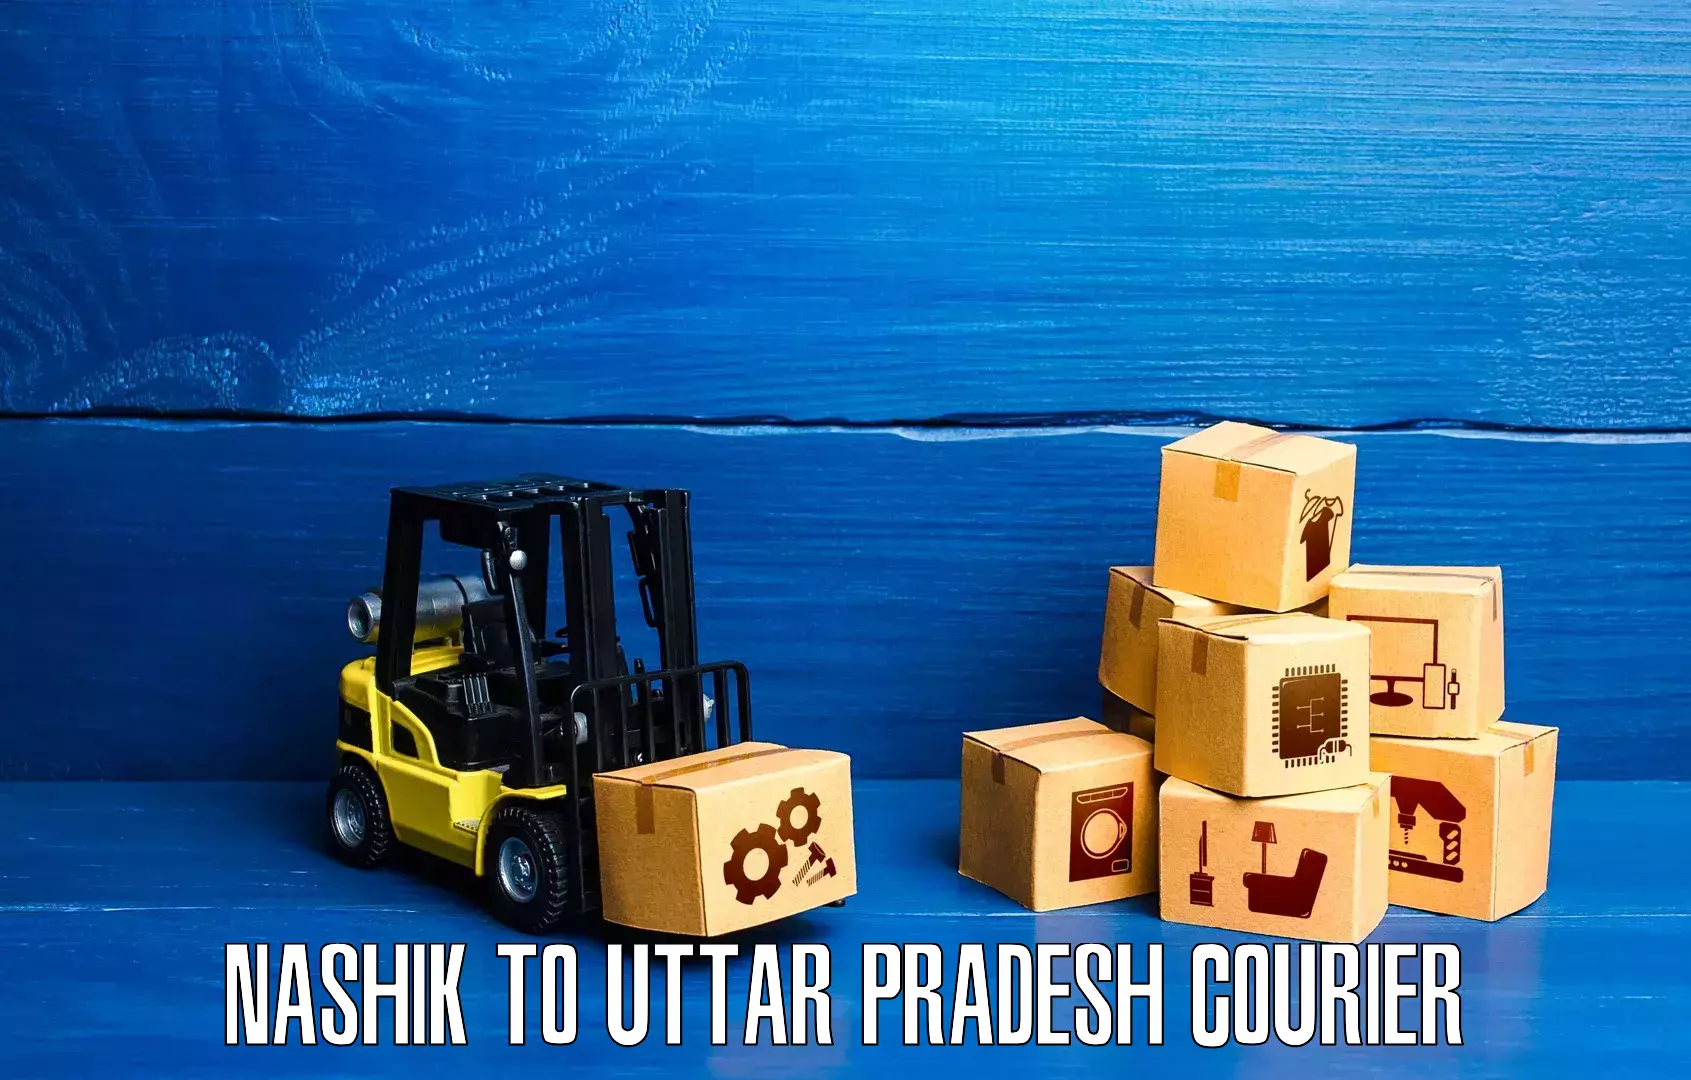 Nationwide shipping coverage Nashik to IIT Kanpur